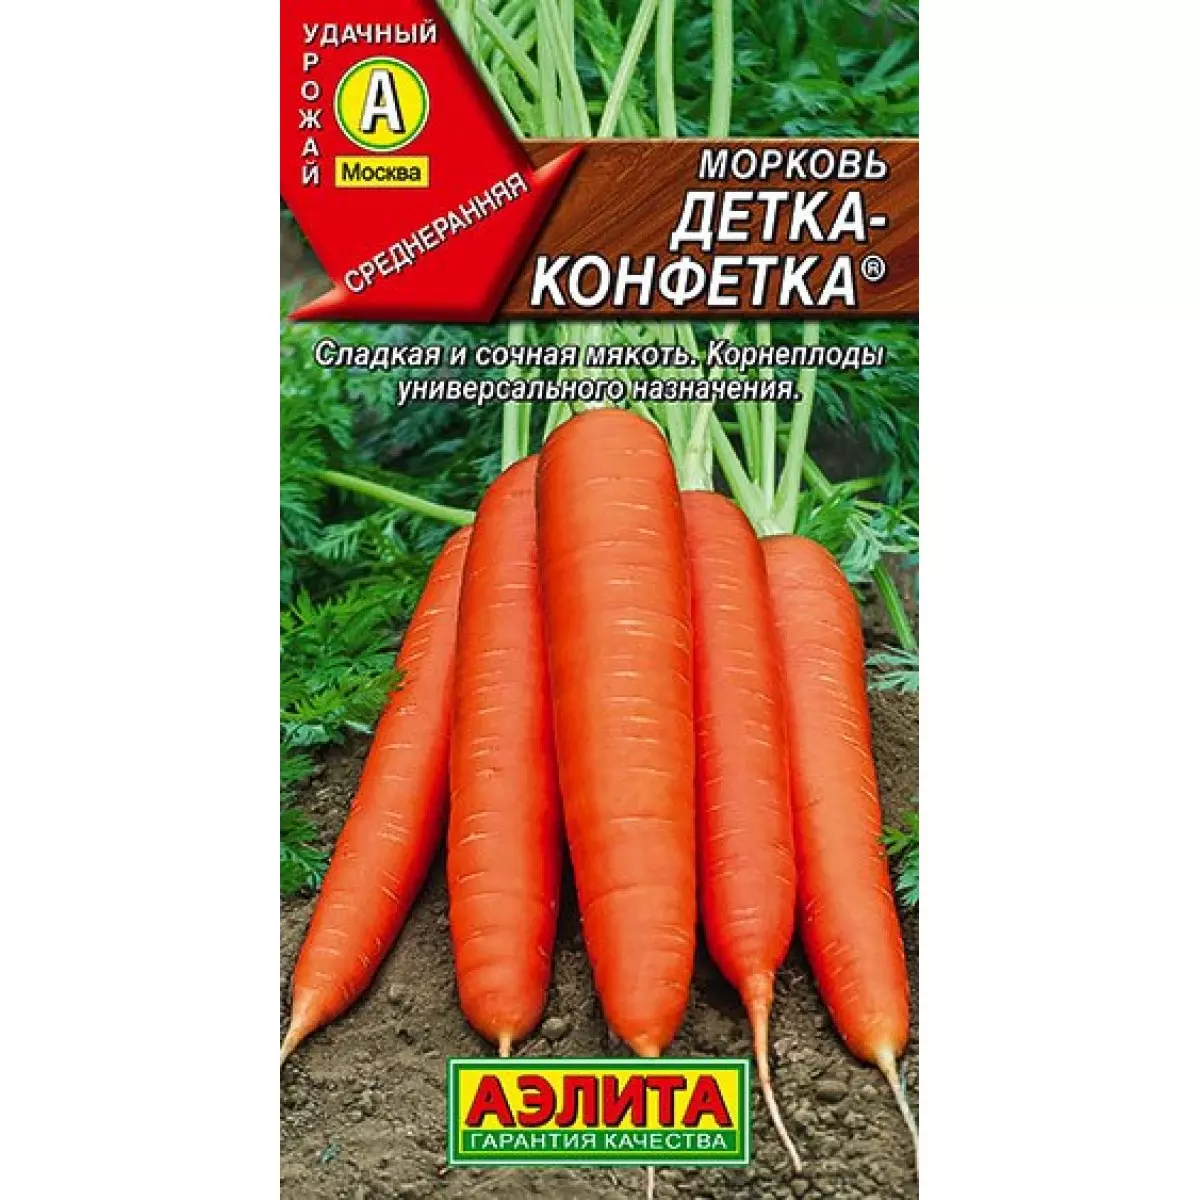 Семена Морковь Детка-конфетка. АЭЛИТА Ц/П 2 г